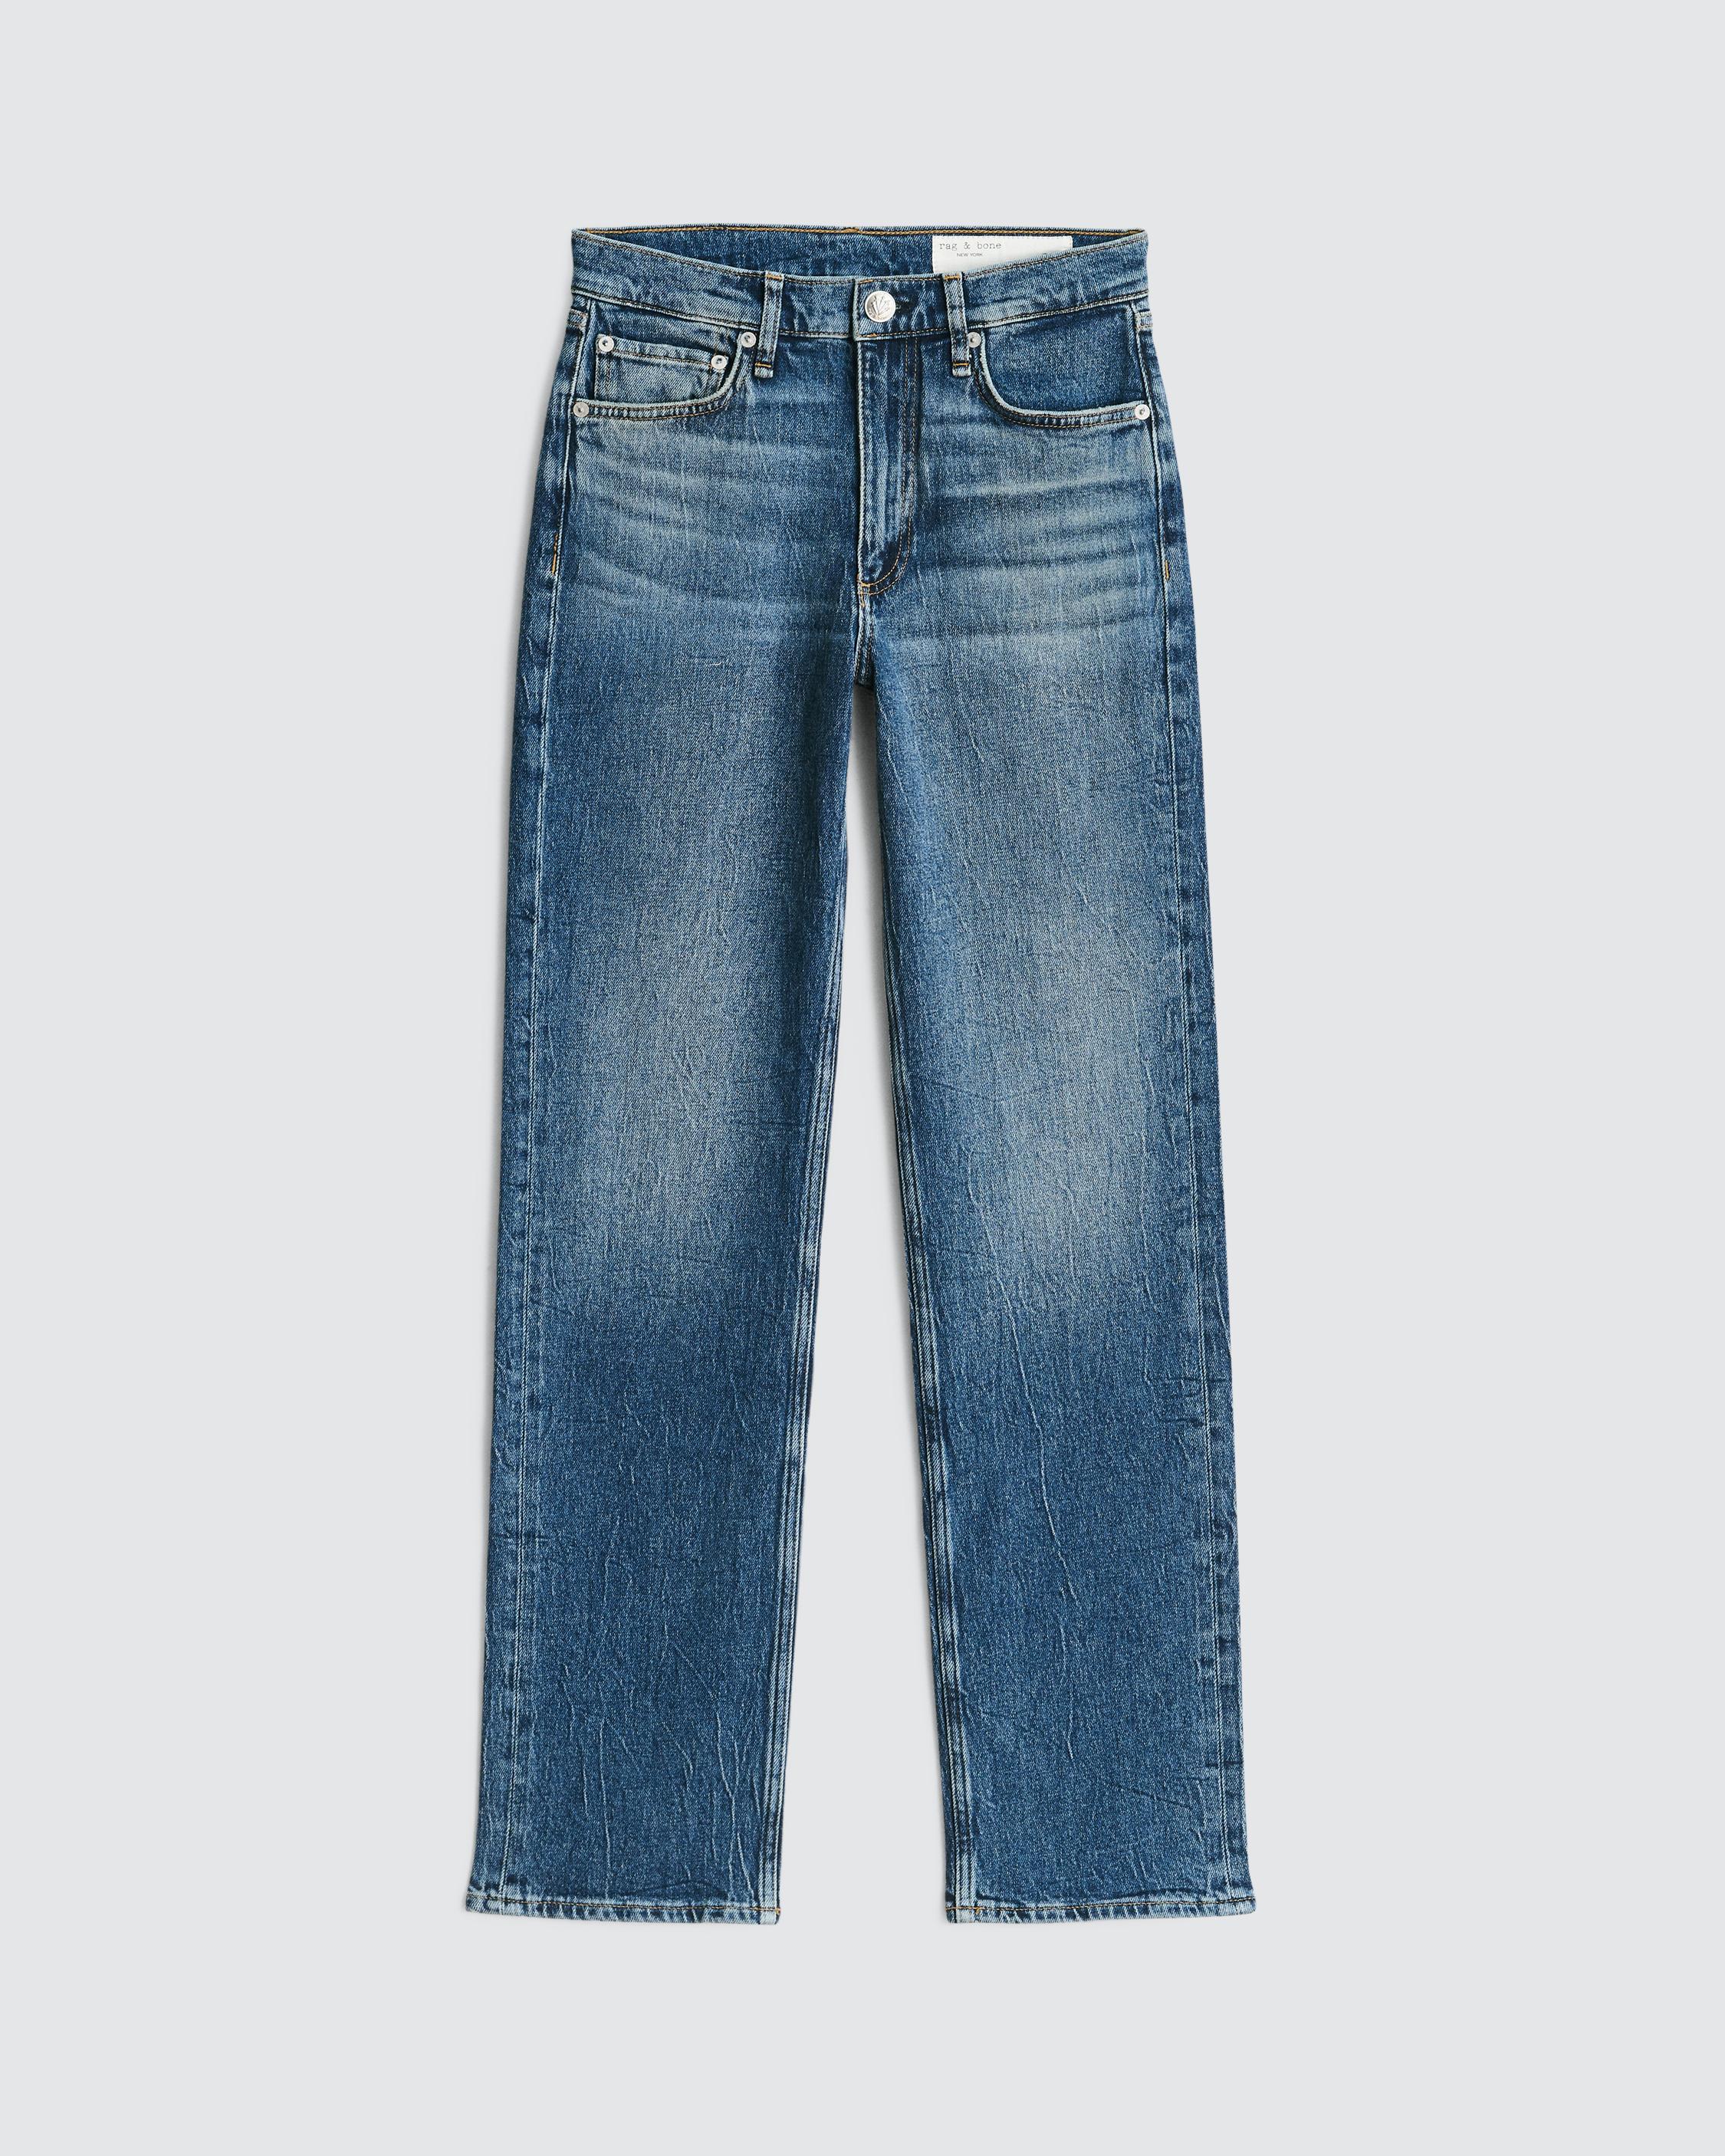 Harlow Full Length Straight Jean